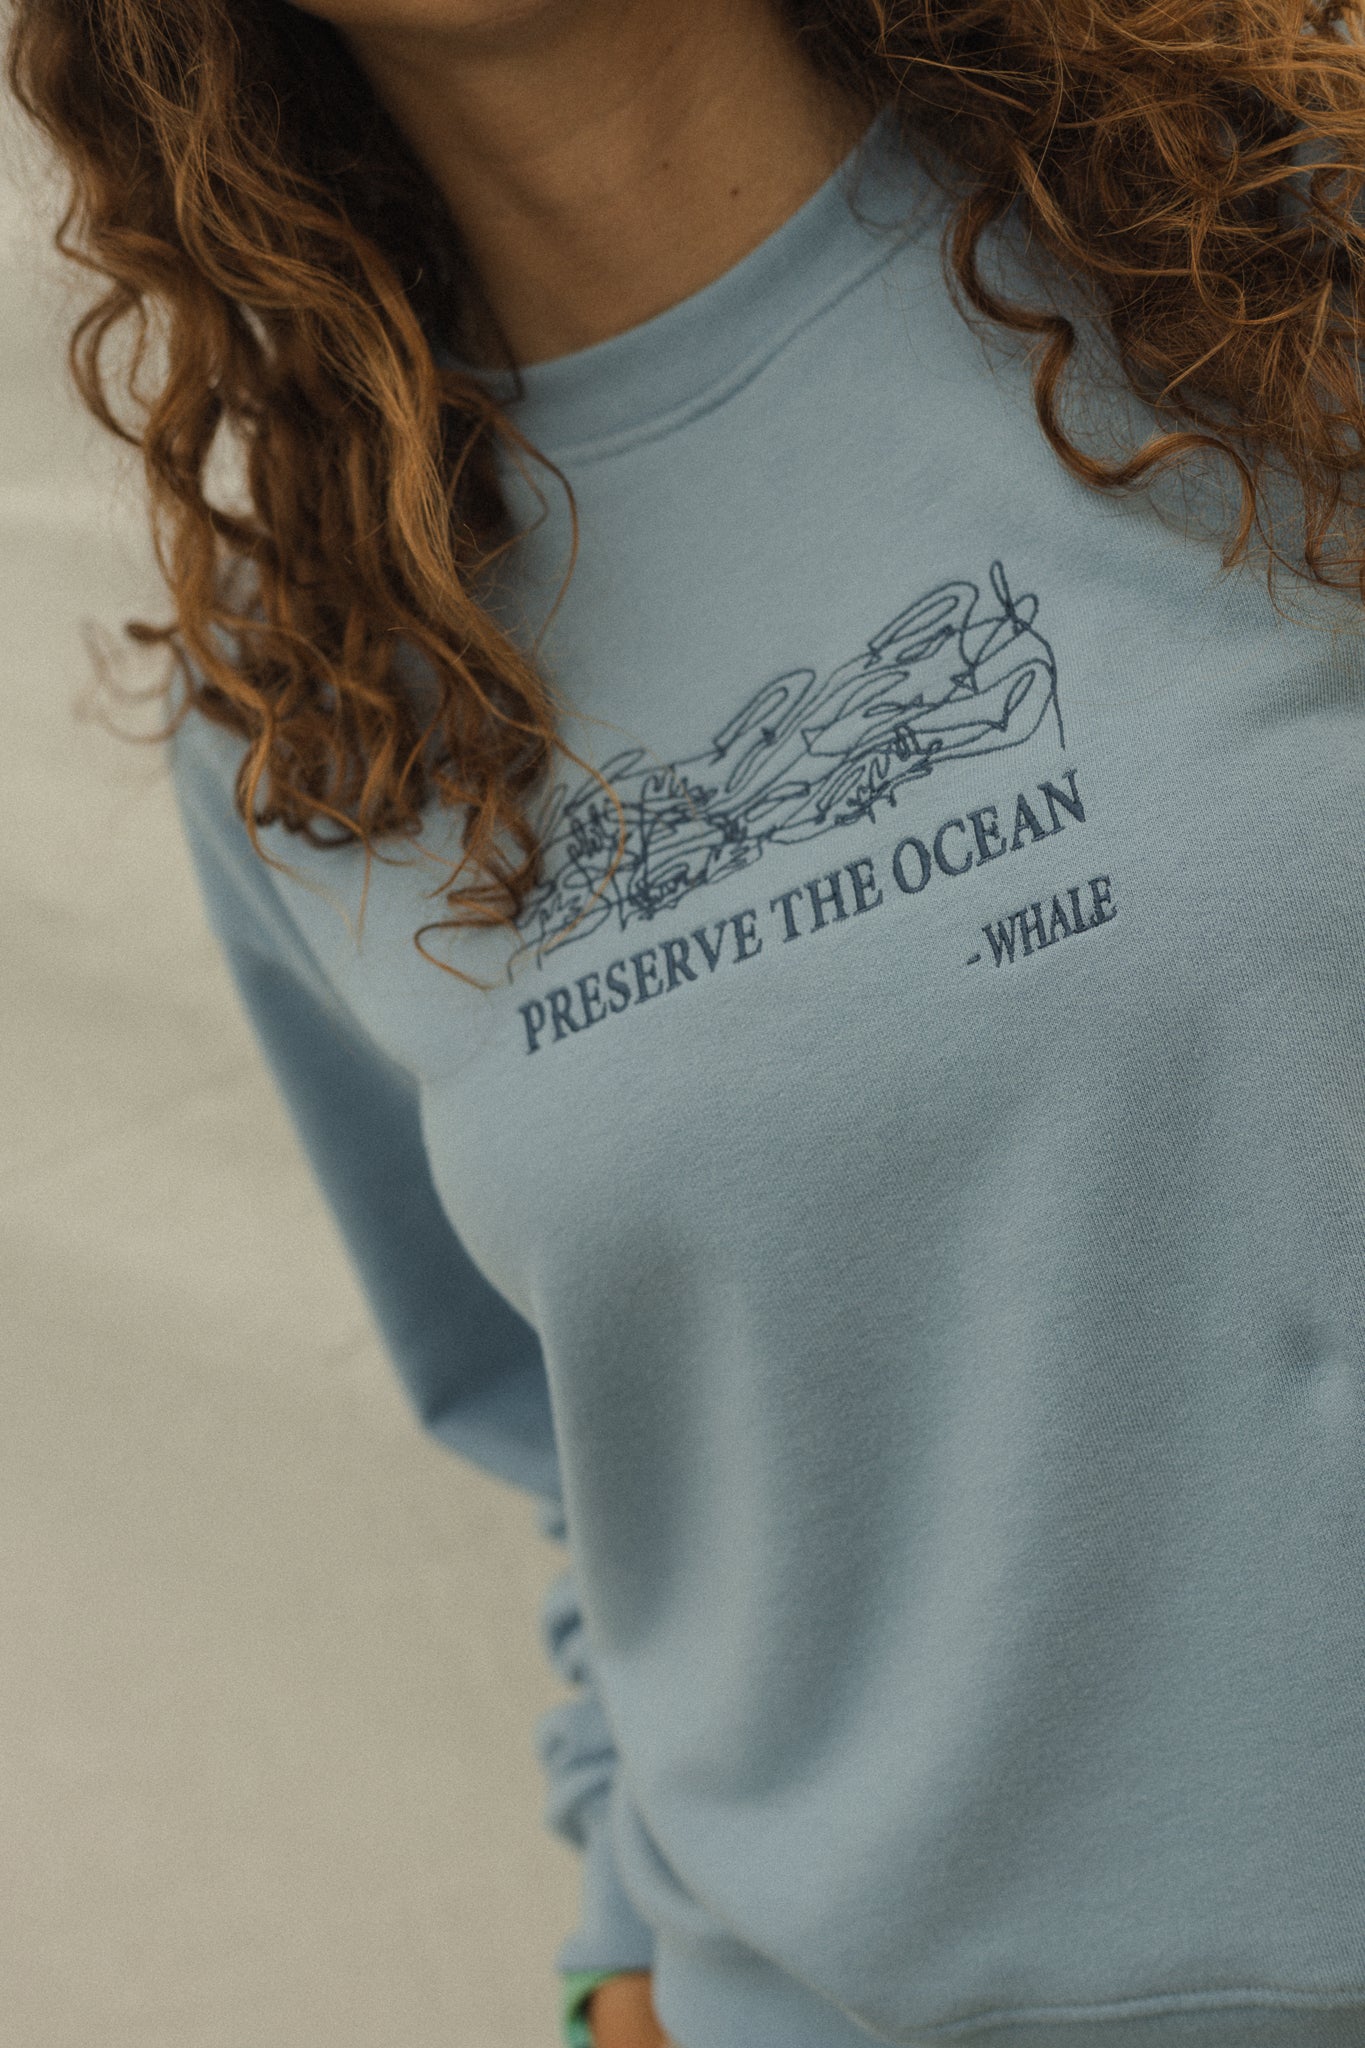 Whale Crop Sweatshirt